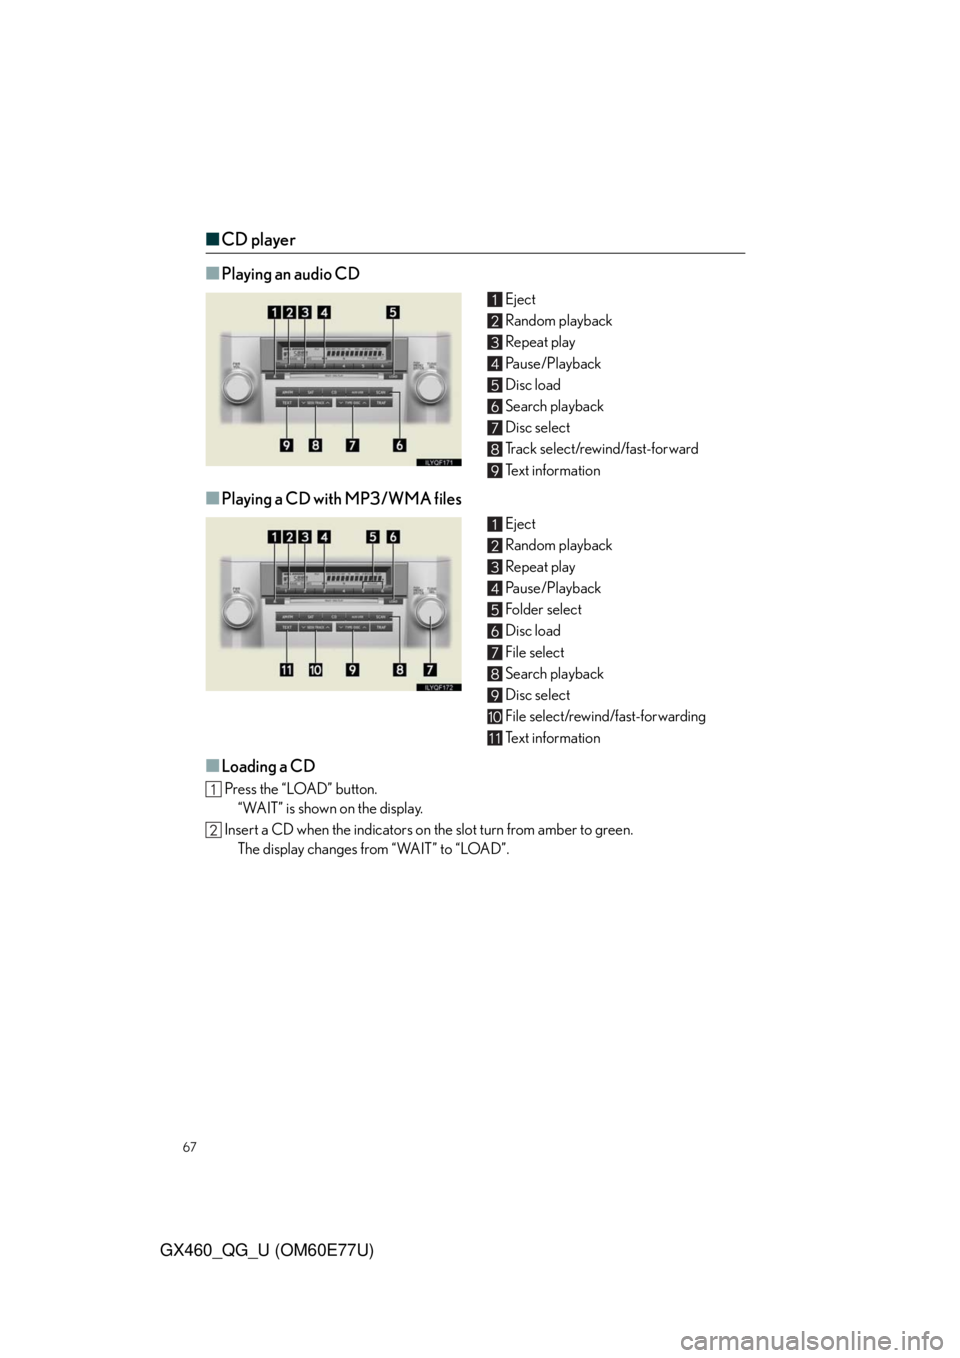 Lexus GX460 2010  Using The Bluetooth Audio System / LEXUS 2010 GX460 OWNERS MANUAL QUICK GUIDE (OM60E77U) 67
GX460_QG_U (OM60E77U)
■CD player
■
Playing an audio CD
Eject
Random playback 
Repeat play
Pause/Playback
Disc load
Search playback
Disc select
Track select/rewind/fast-forward
Te x t  i n f o r